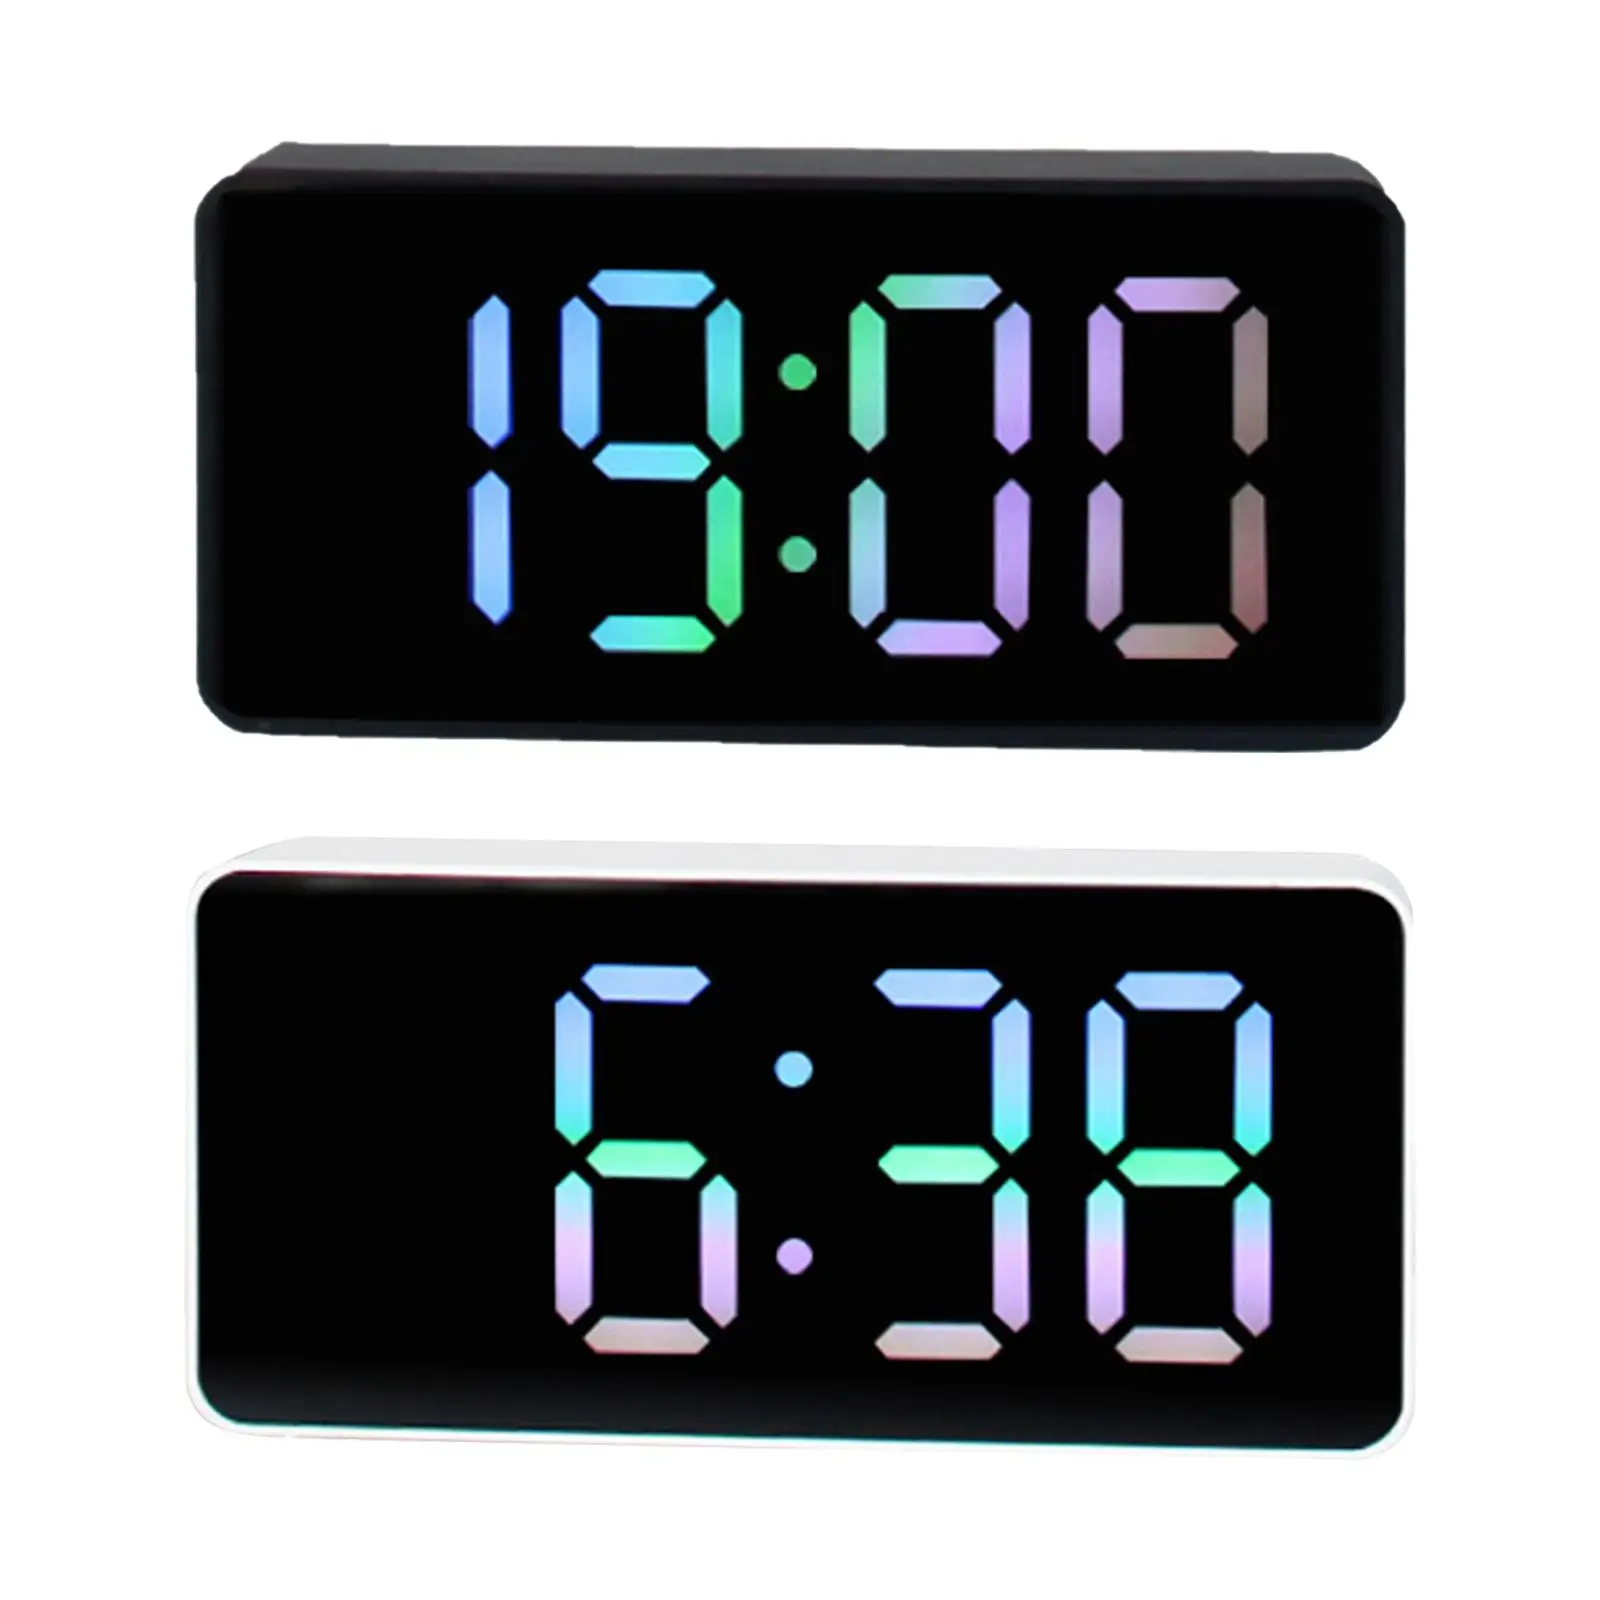 2Pcs Digital alarms Clocks Desktop Clock Voice Control for Home Office